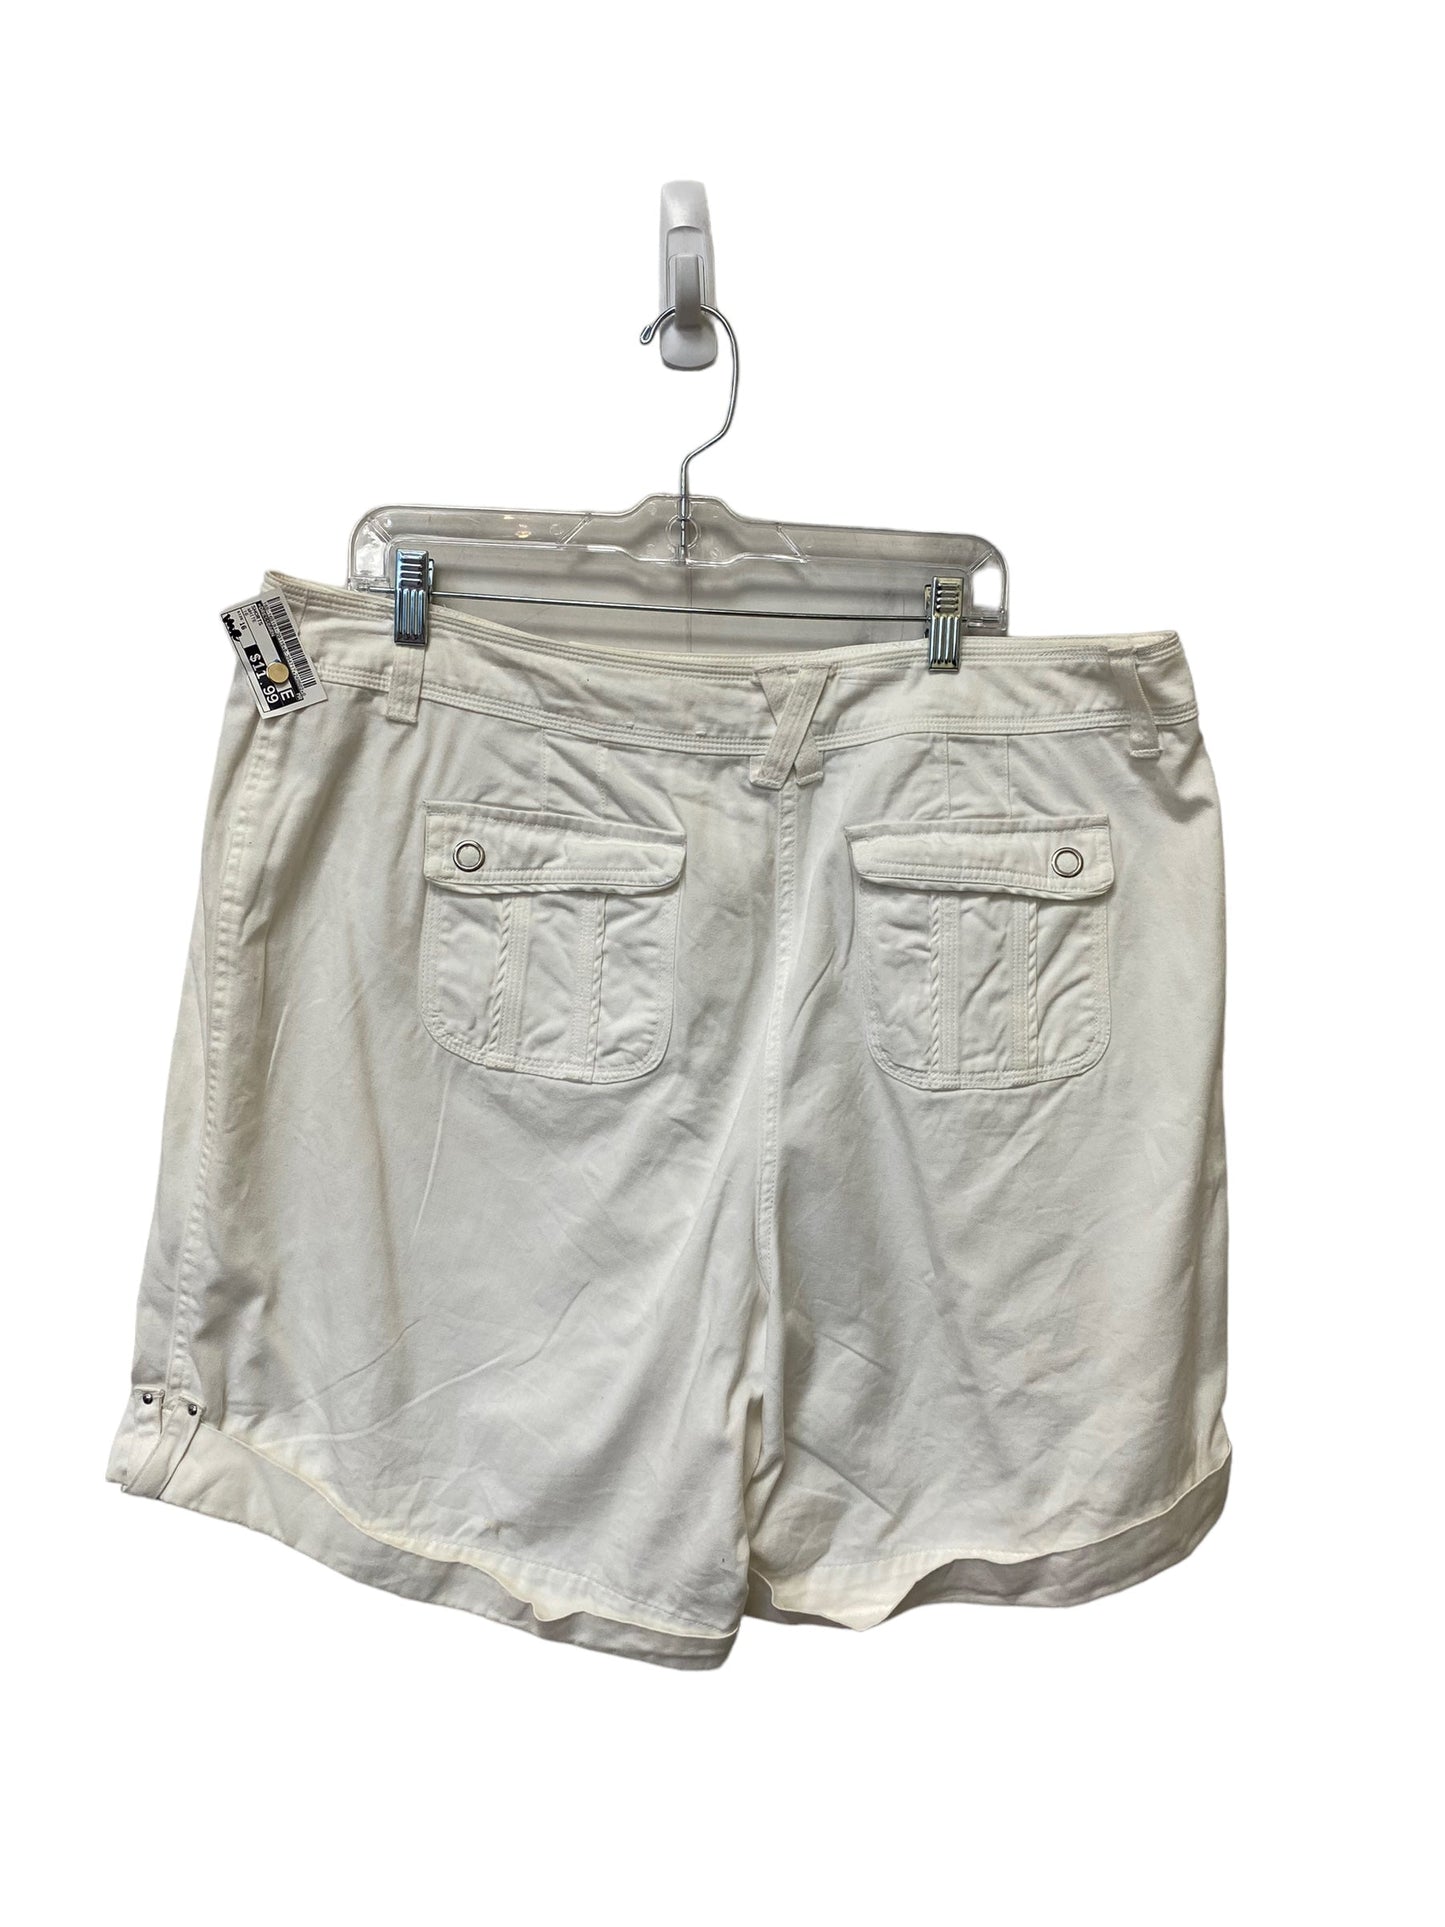 Shorts By Dressbarn  Size: 16